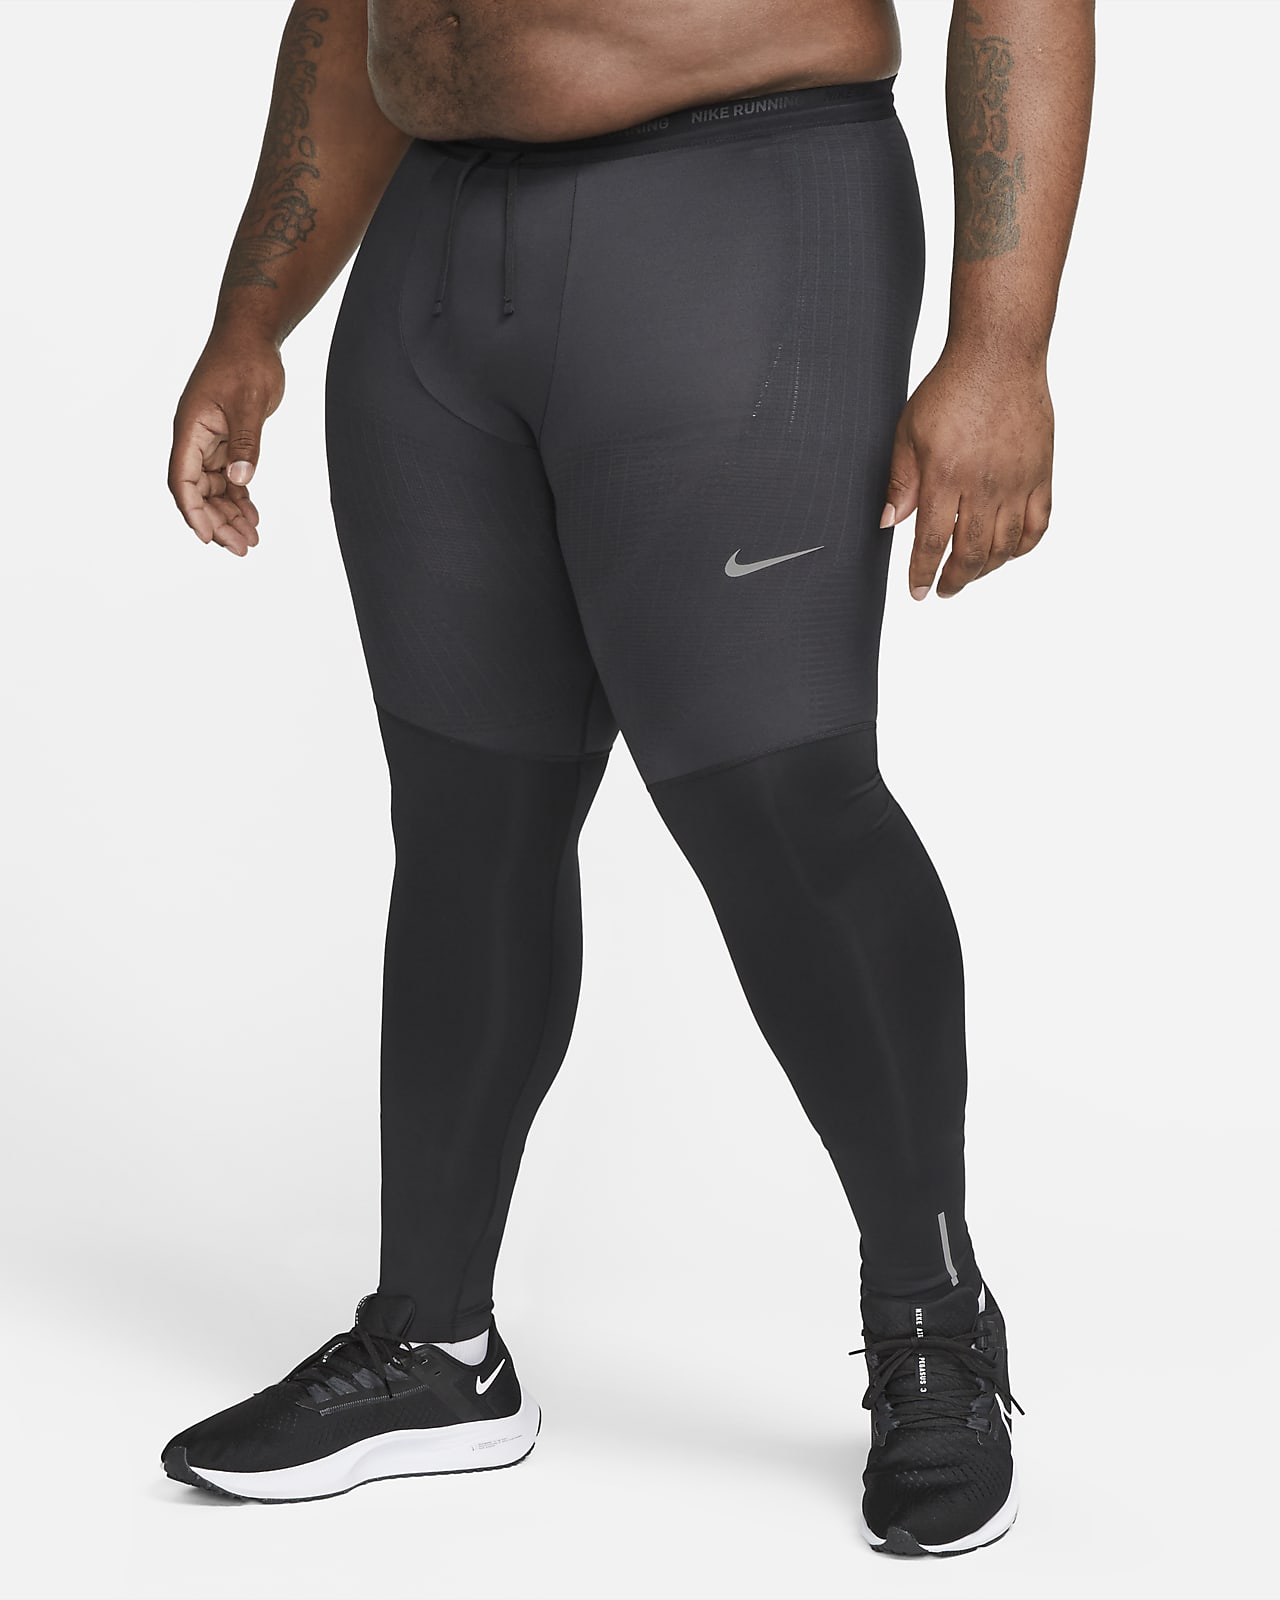 Nike Phenom Elite Wild Run Running Pants CU5972-410 Navy-Size XL  194498376638 | eBay